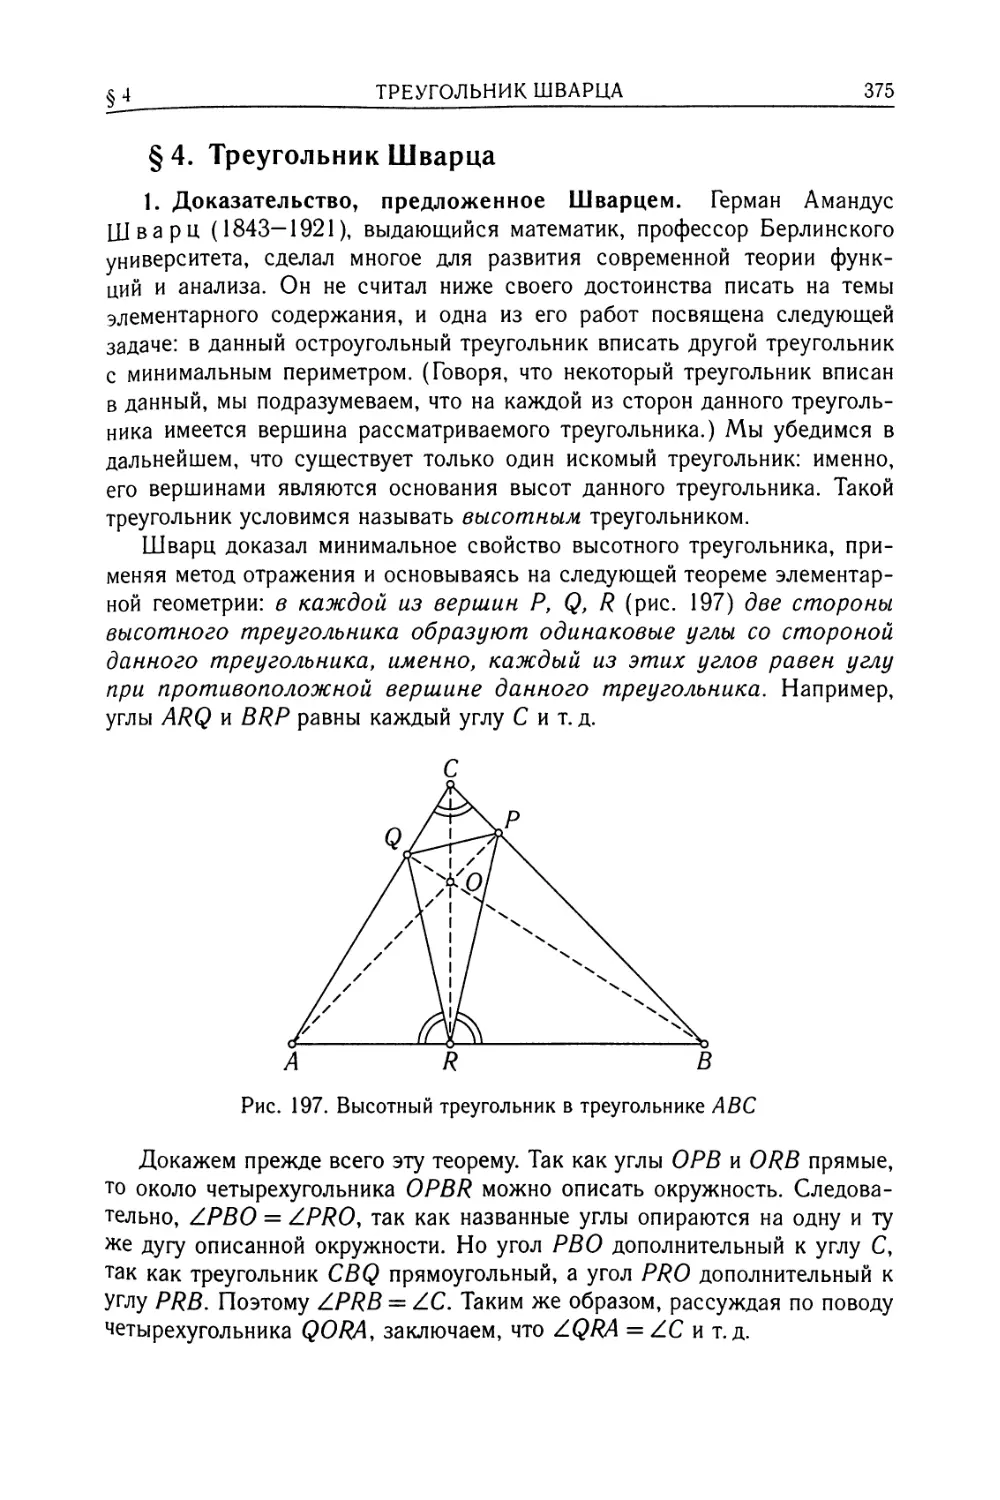 § 4. Треугольник Шварца